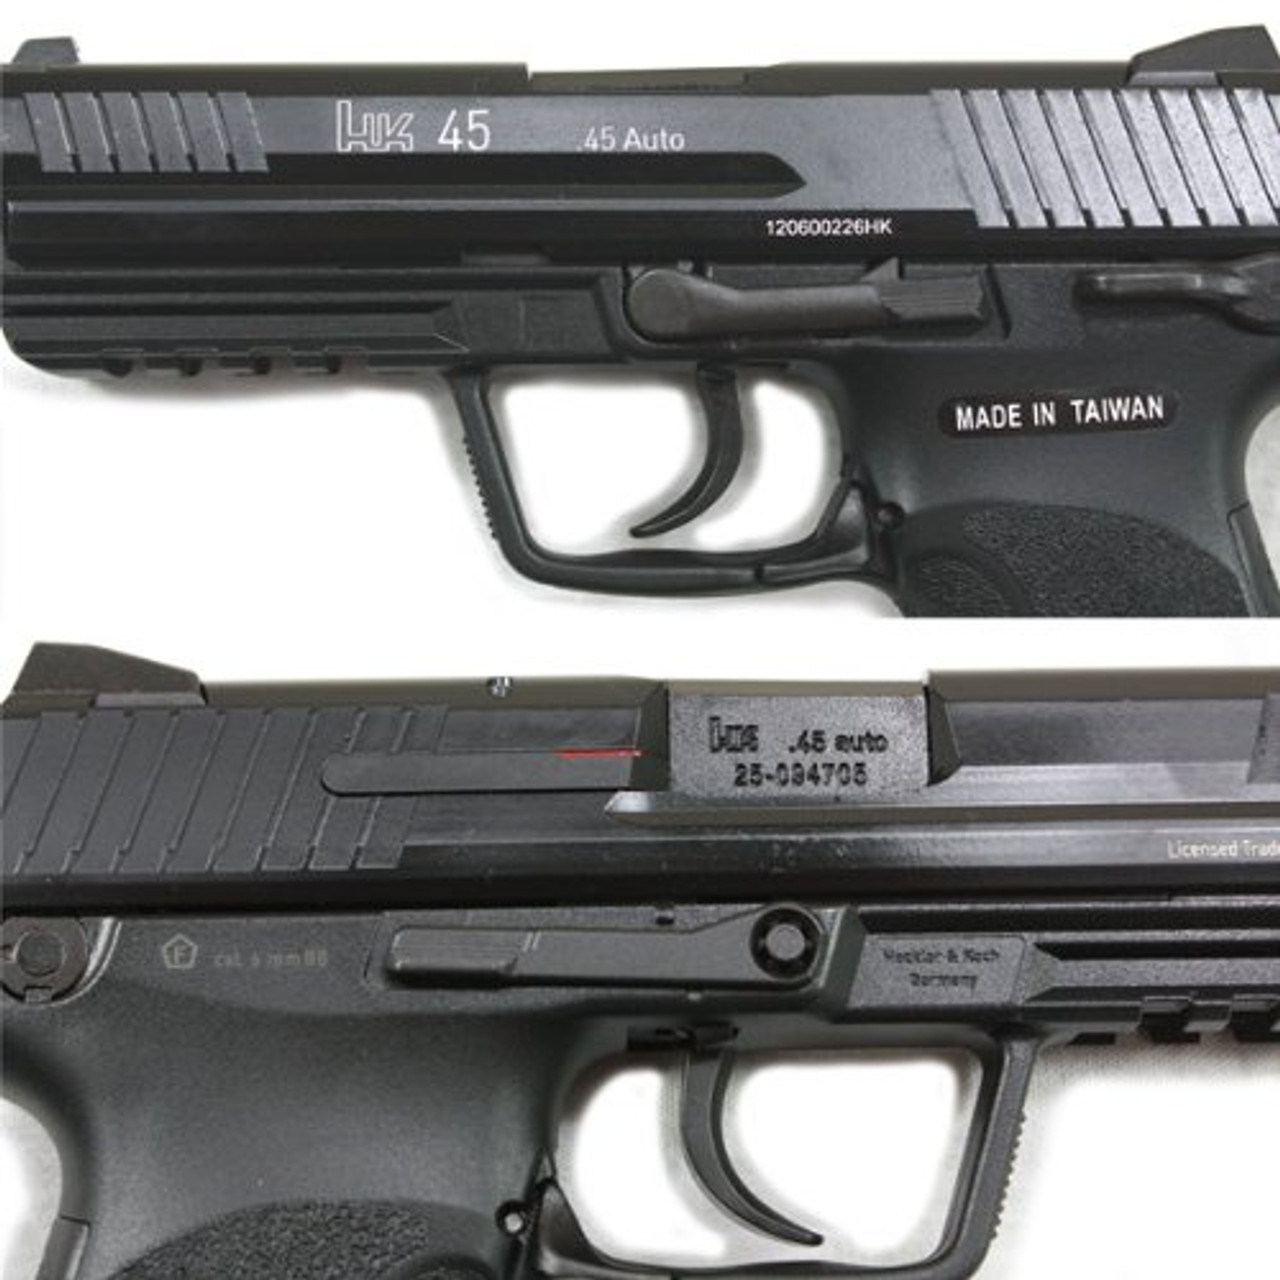 Trigger of UMAREX H & K 45 System 7 Metal Slide Version GBB Airsoft Gun 